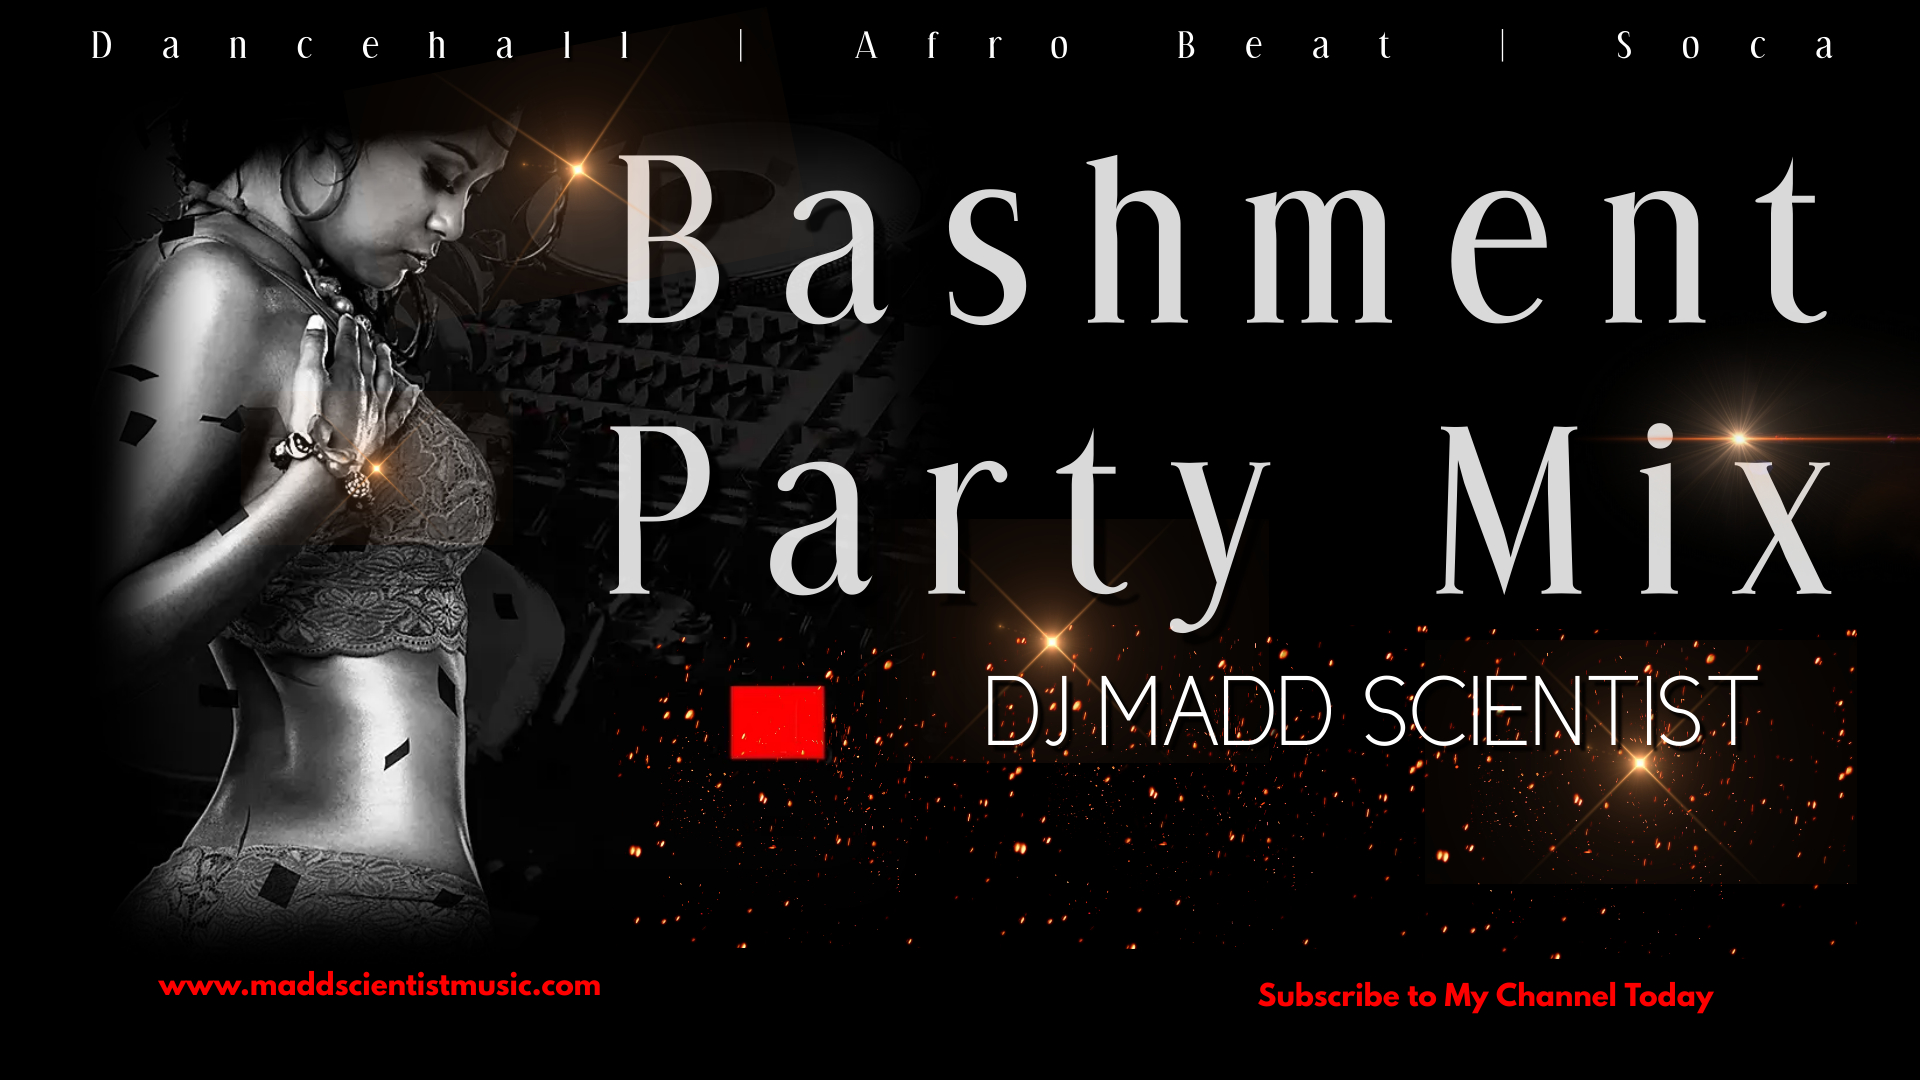 Madd Scientist Bashment Party Mix (Danceghall Reggae Soca)